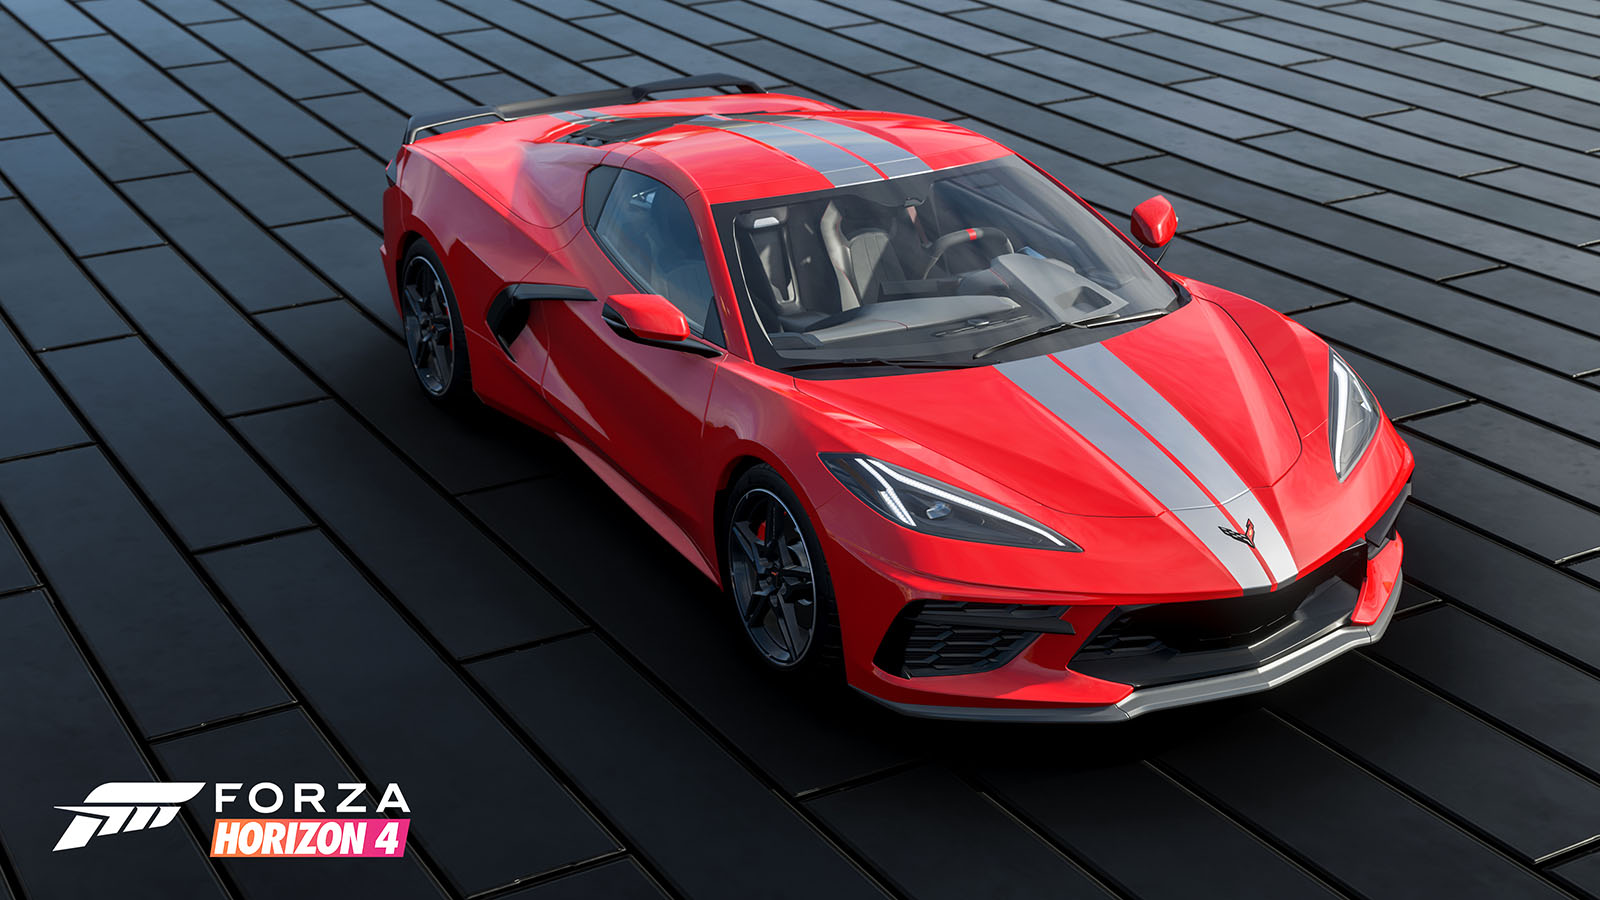 Corvette Stingray Coming to Forza Horizon 4